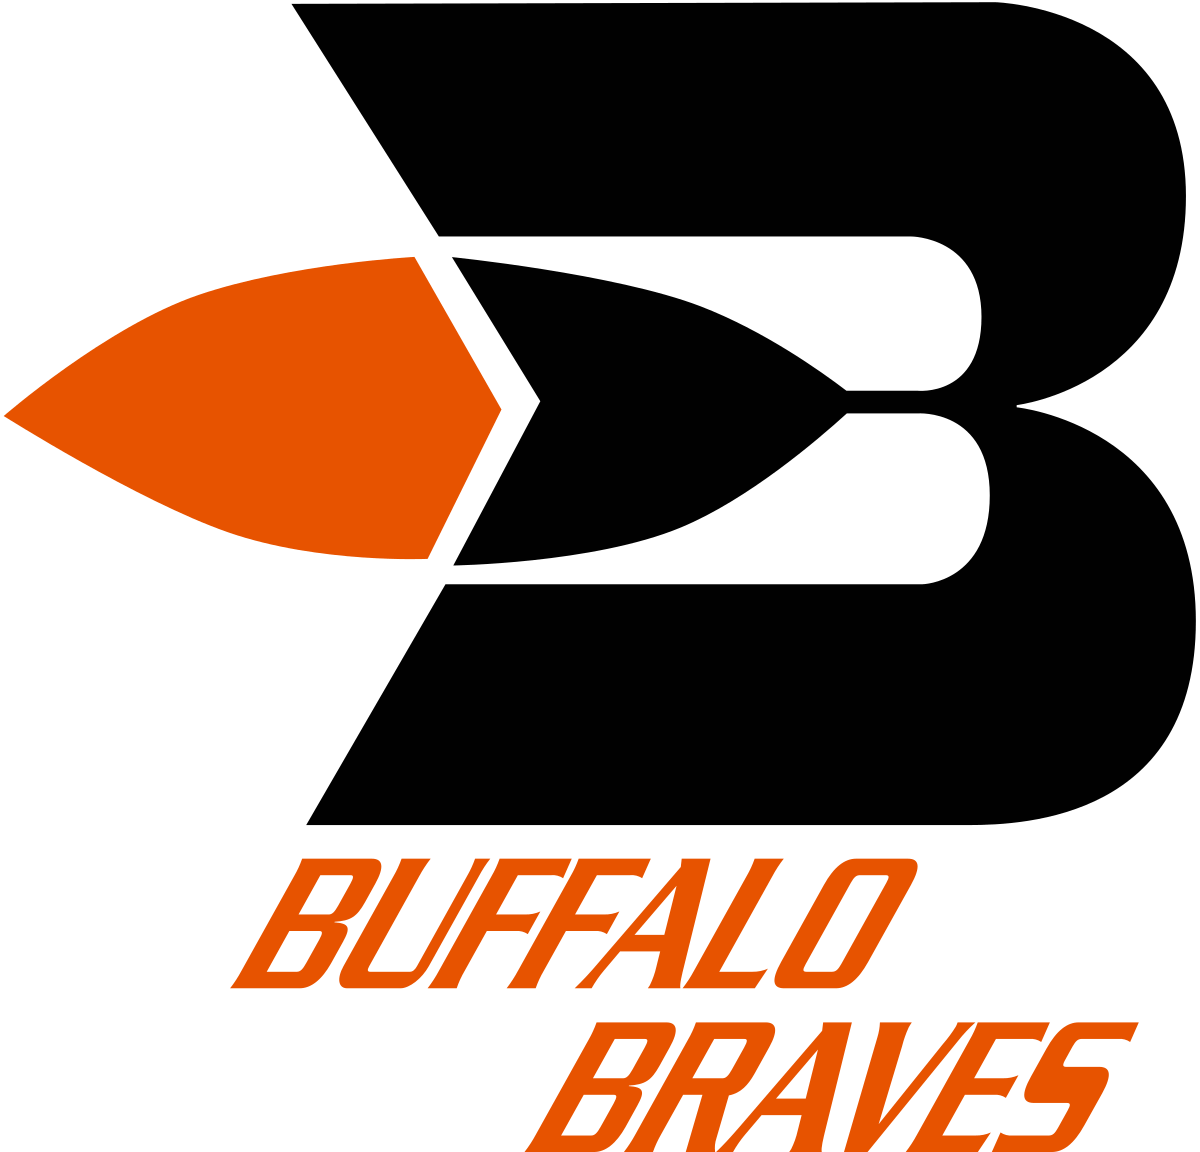 Part of Orange B Logo - Buffalo Braves